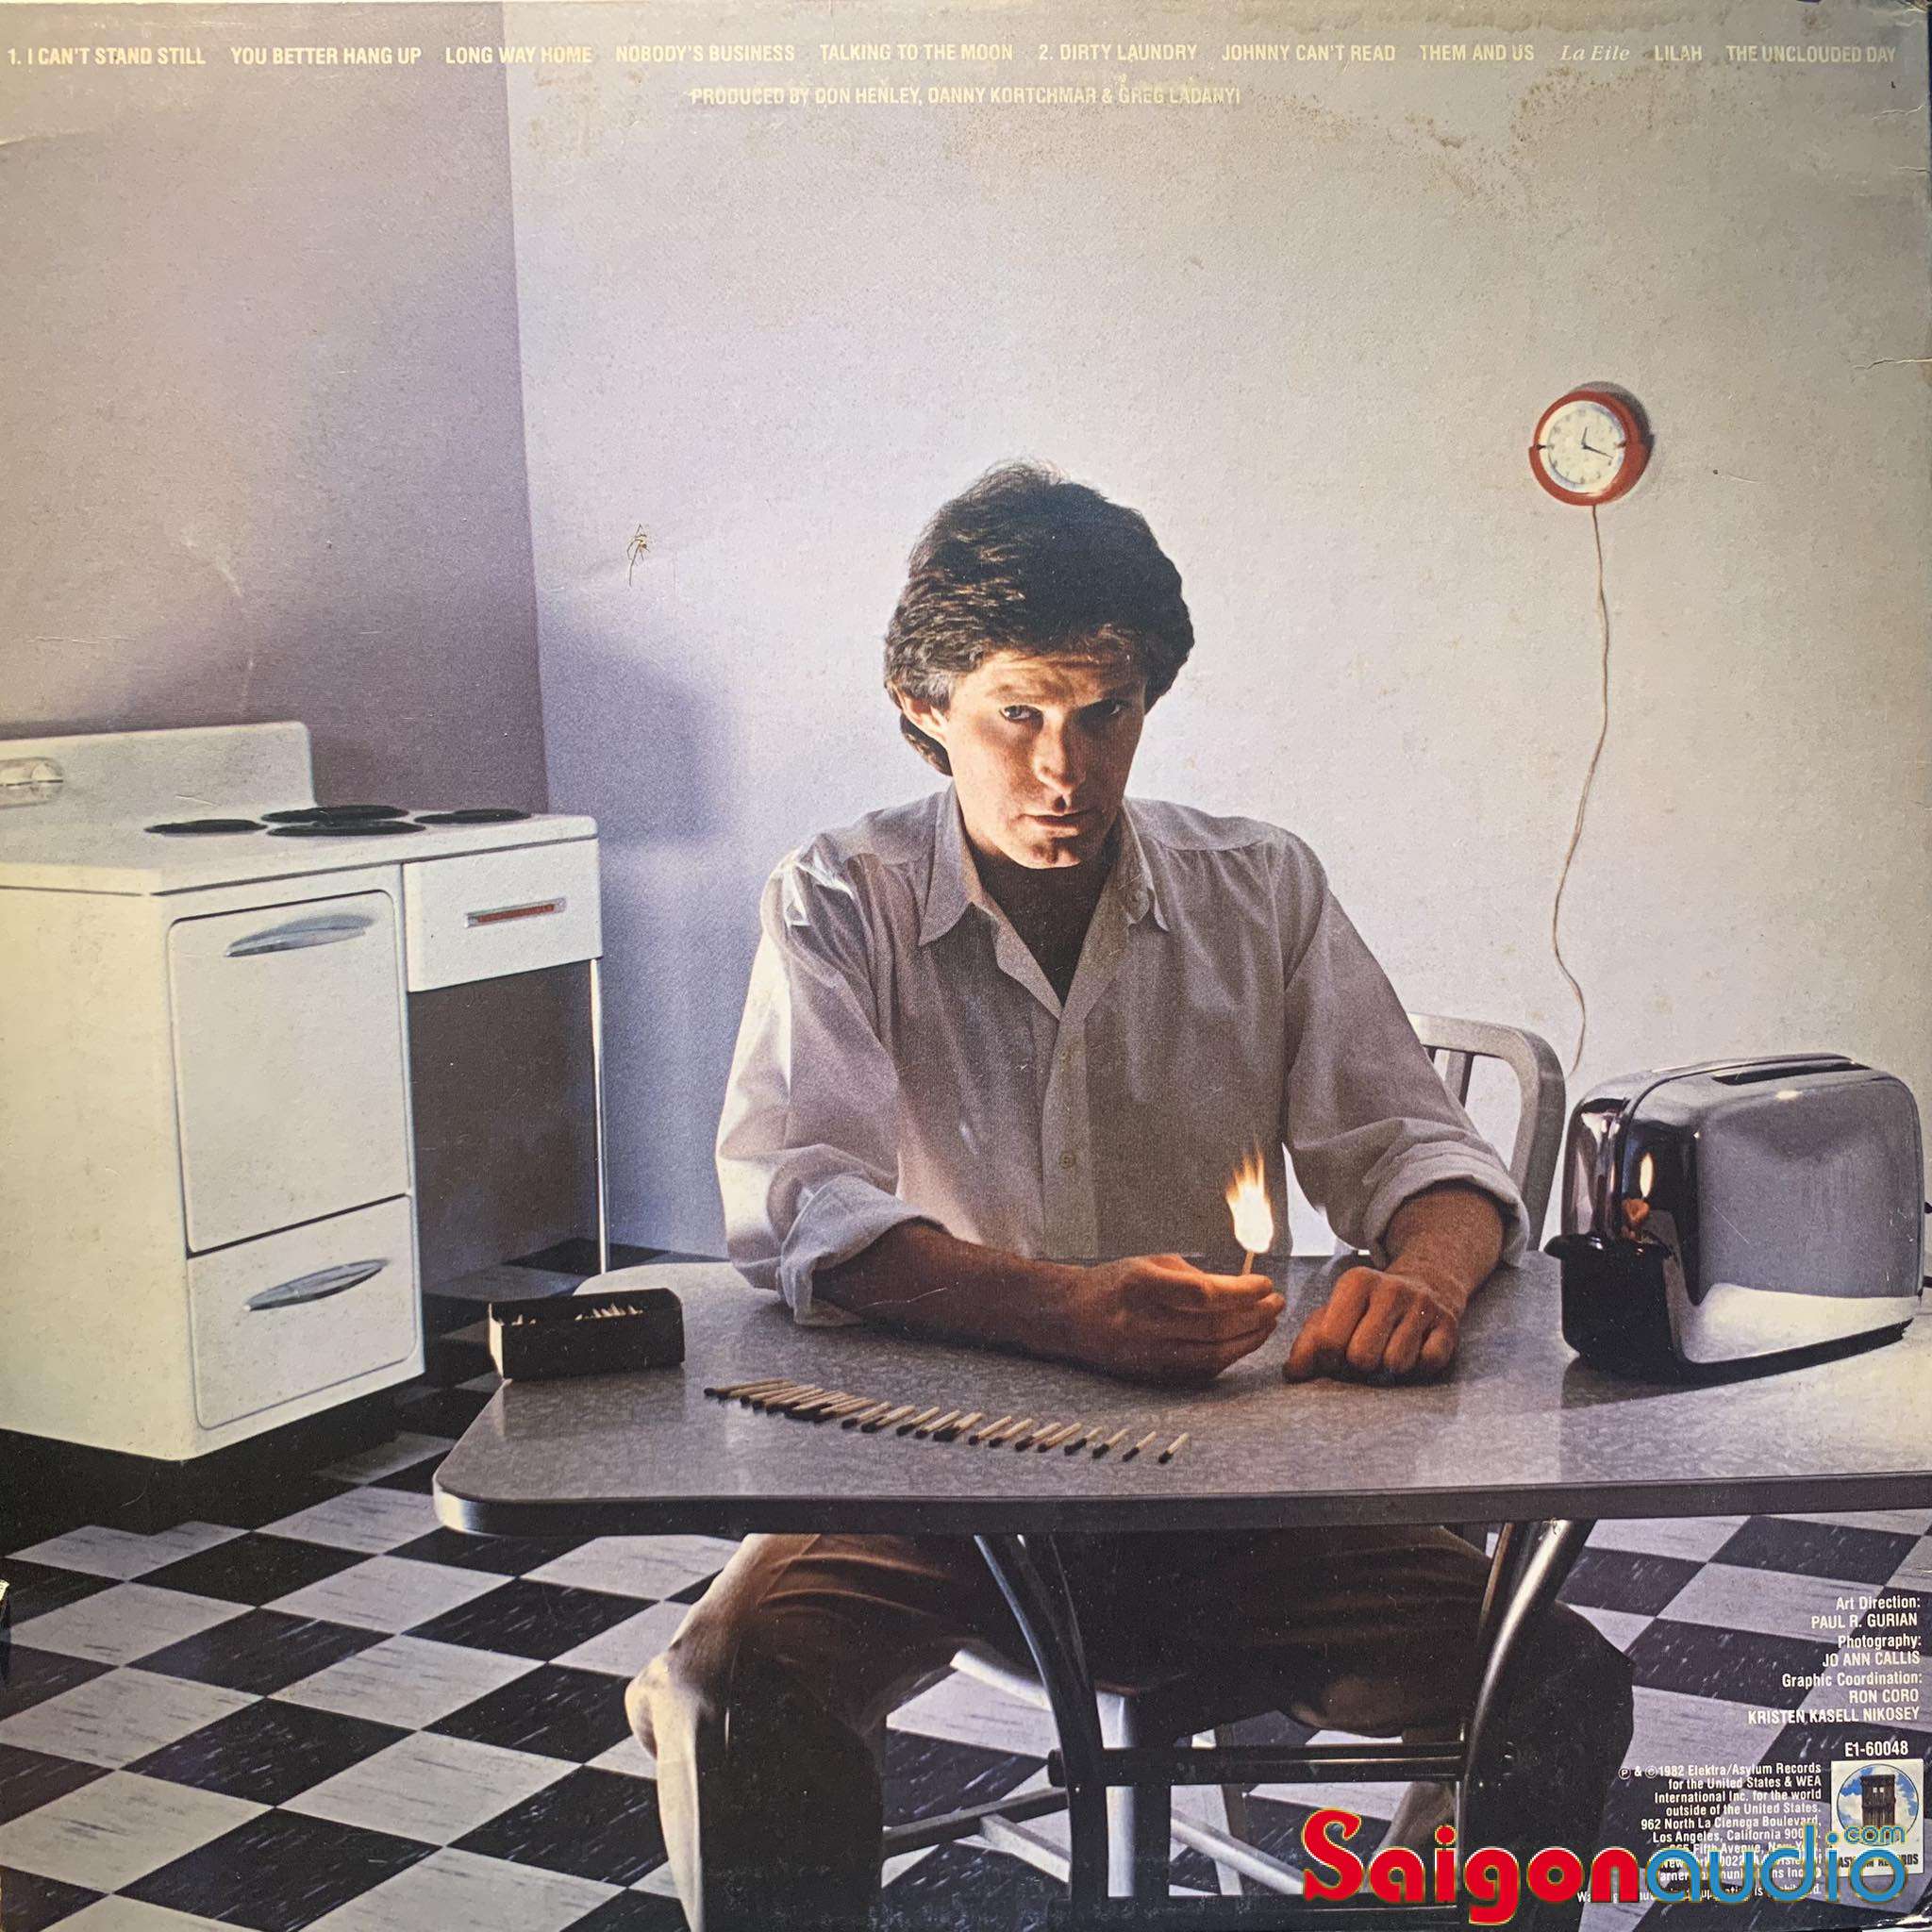 Đĩa than Don Henley – I Cant Stand Still | LP Vinyl Records